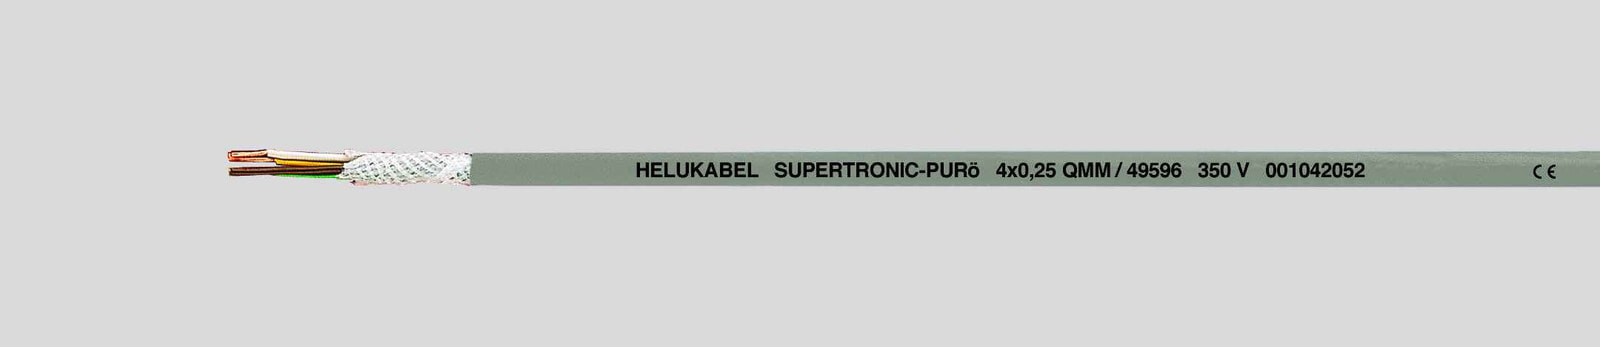 Helukabel 49586 - Low voltage cable - Grey - Cooper - 0.14 mm² - 7 kg/km - -5 - 70 °C